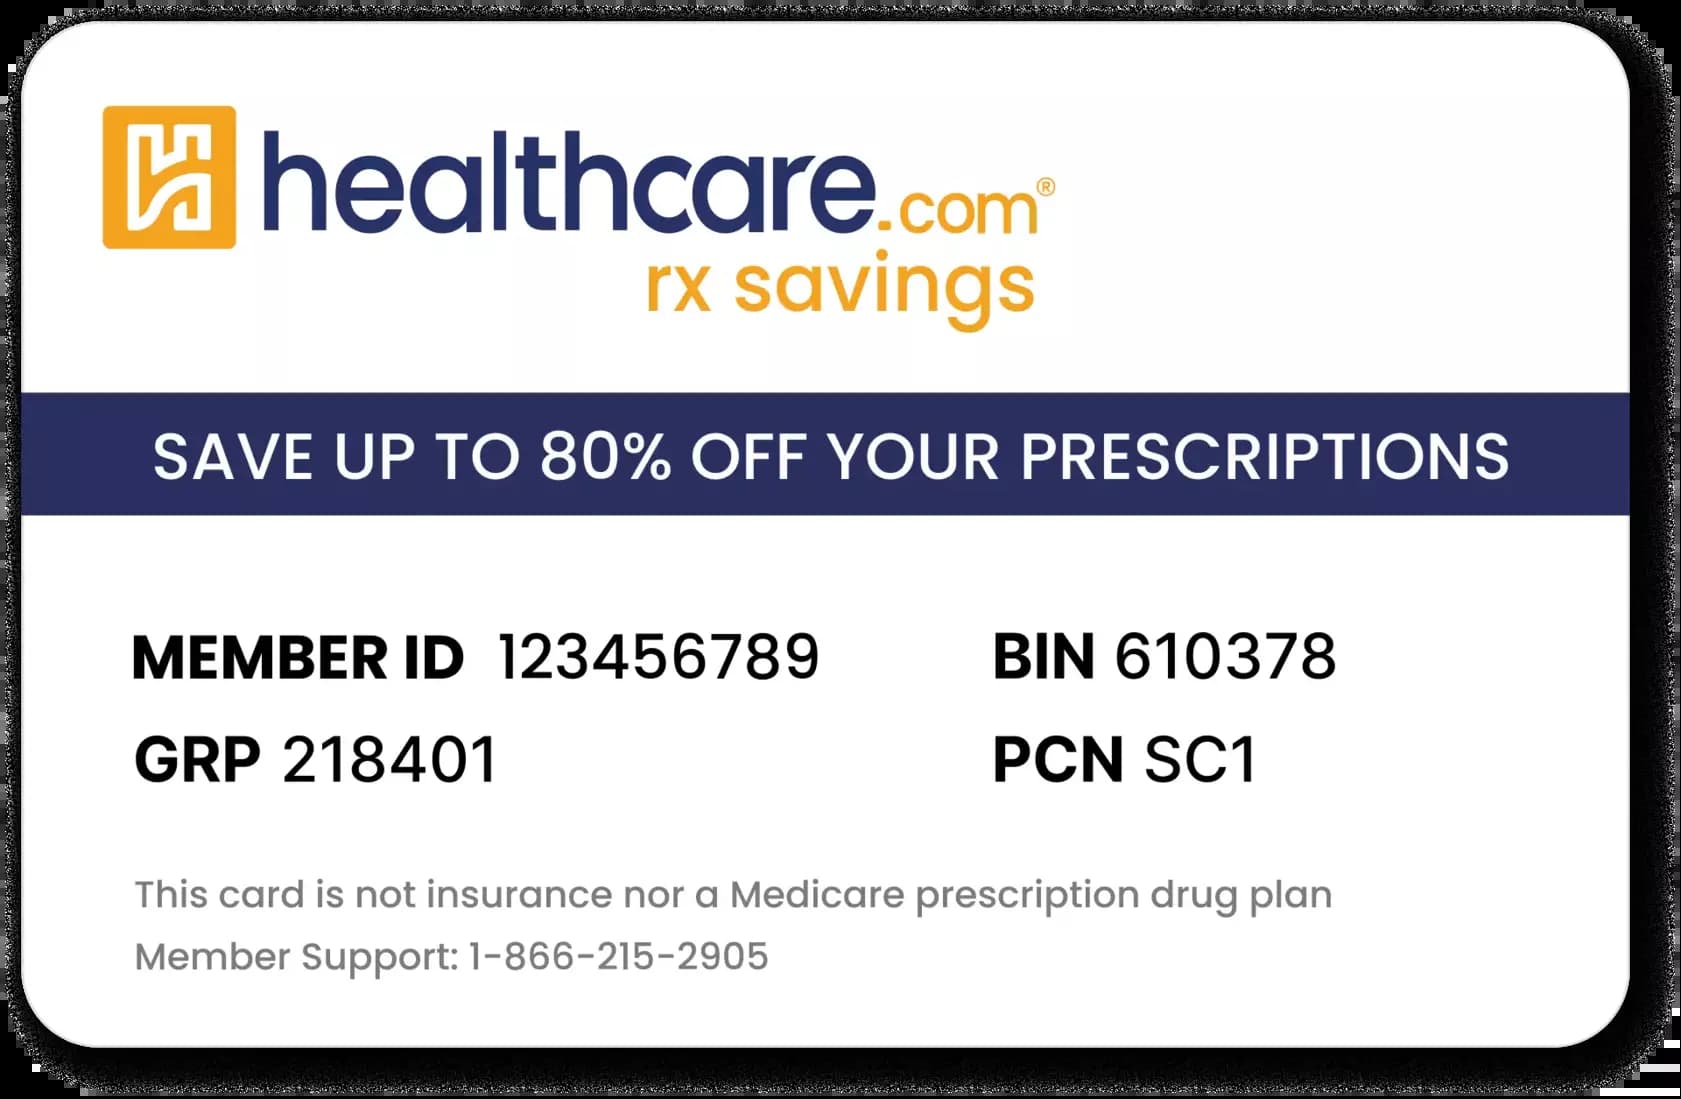 Healthcare.com Rx savings card image